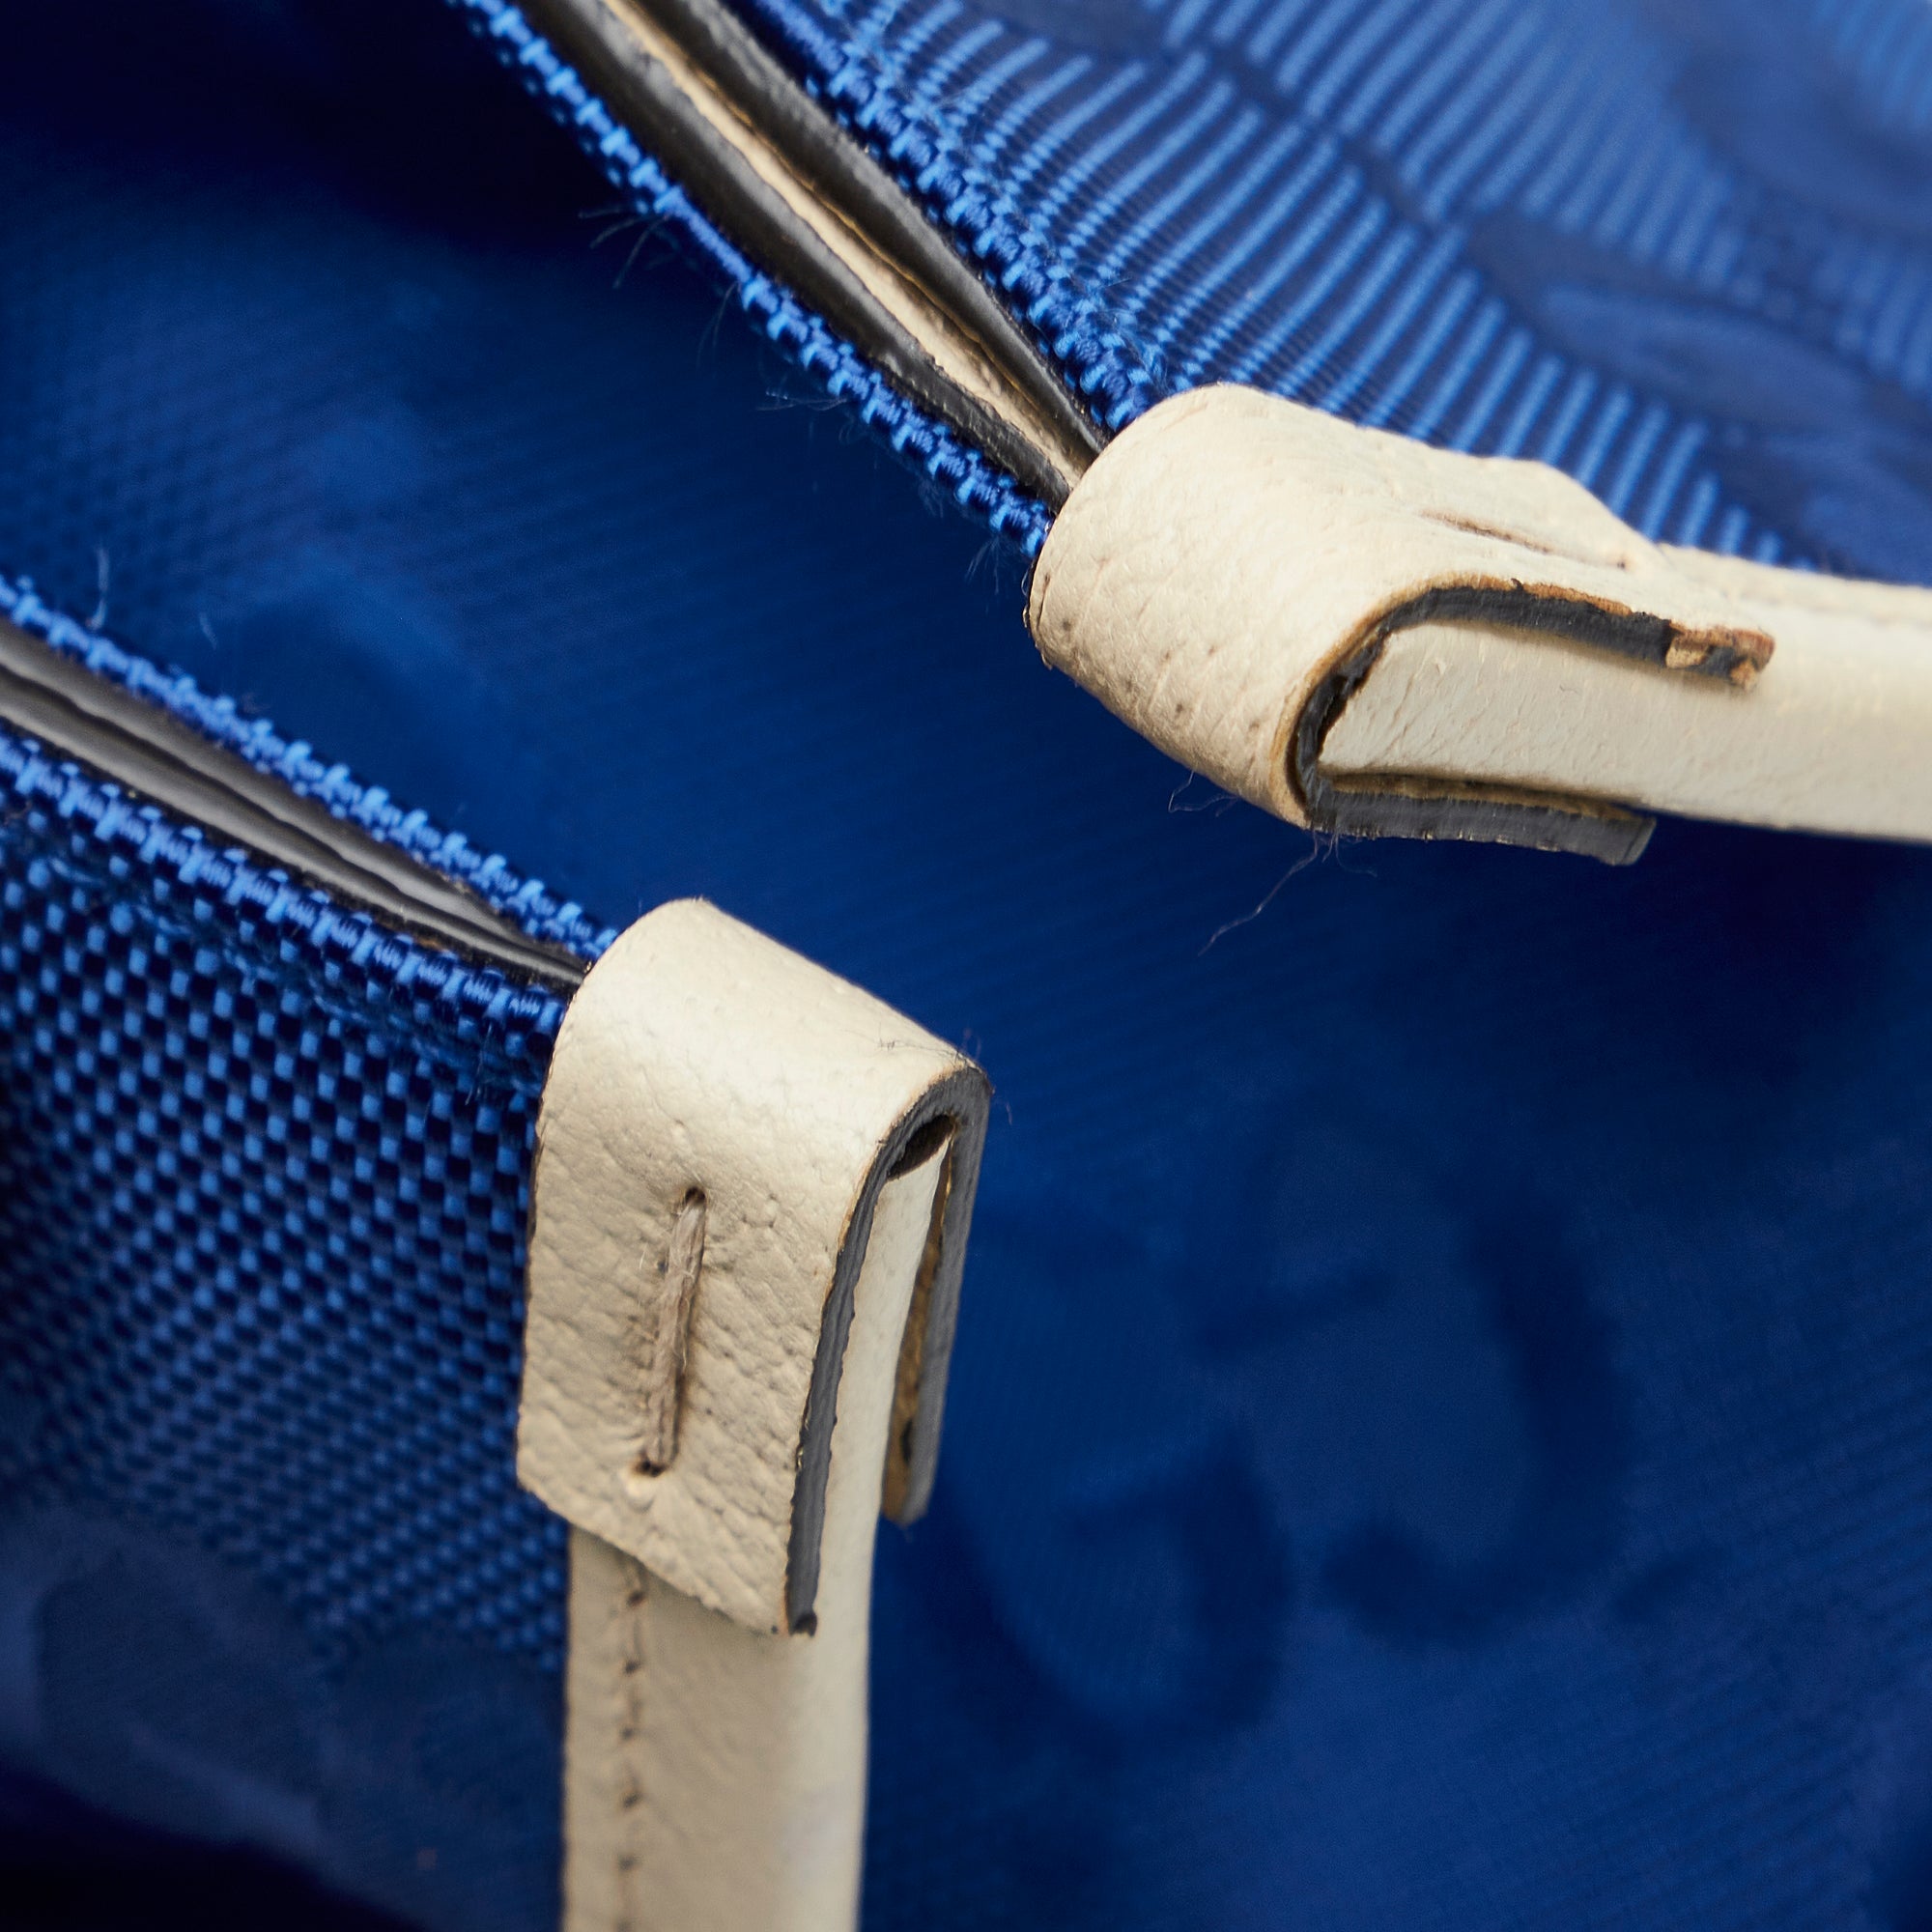 Blue Gucci GG Nylon Off The Grid Backpack – Designer Revival